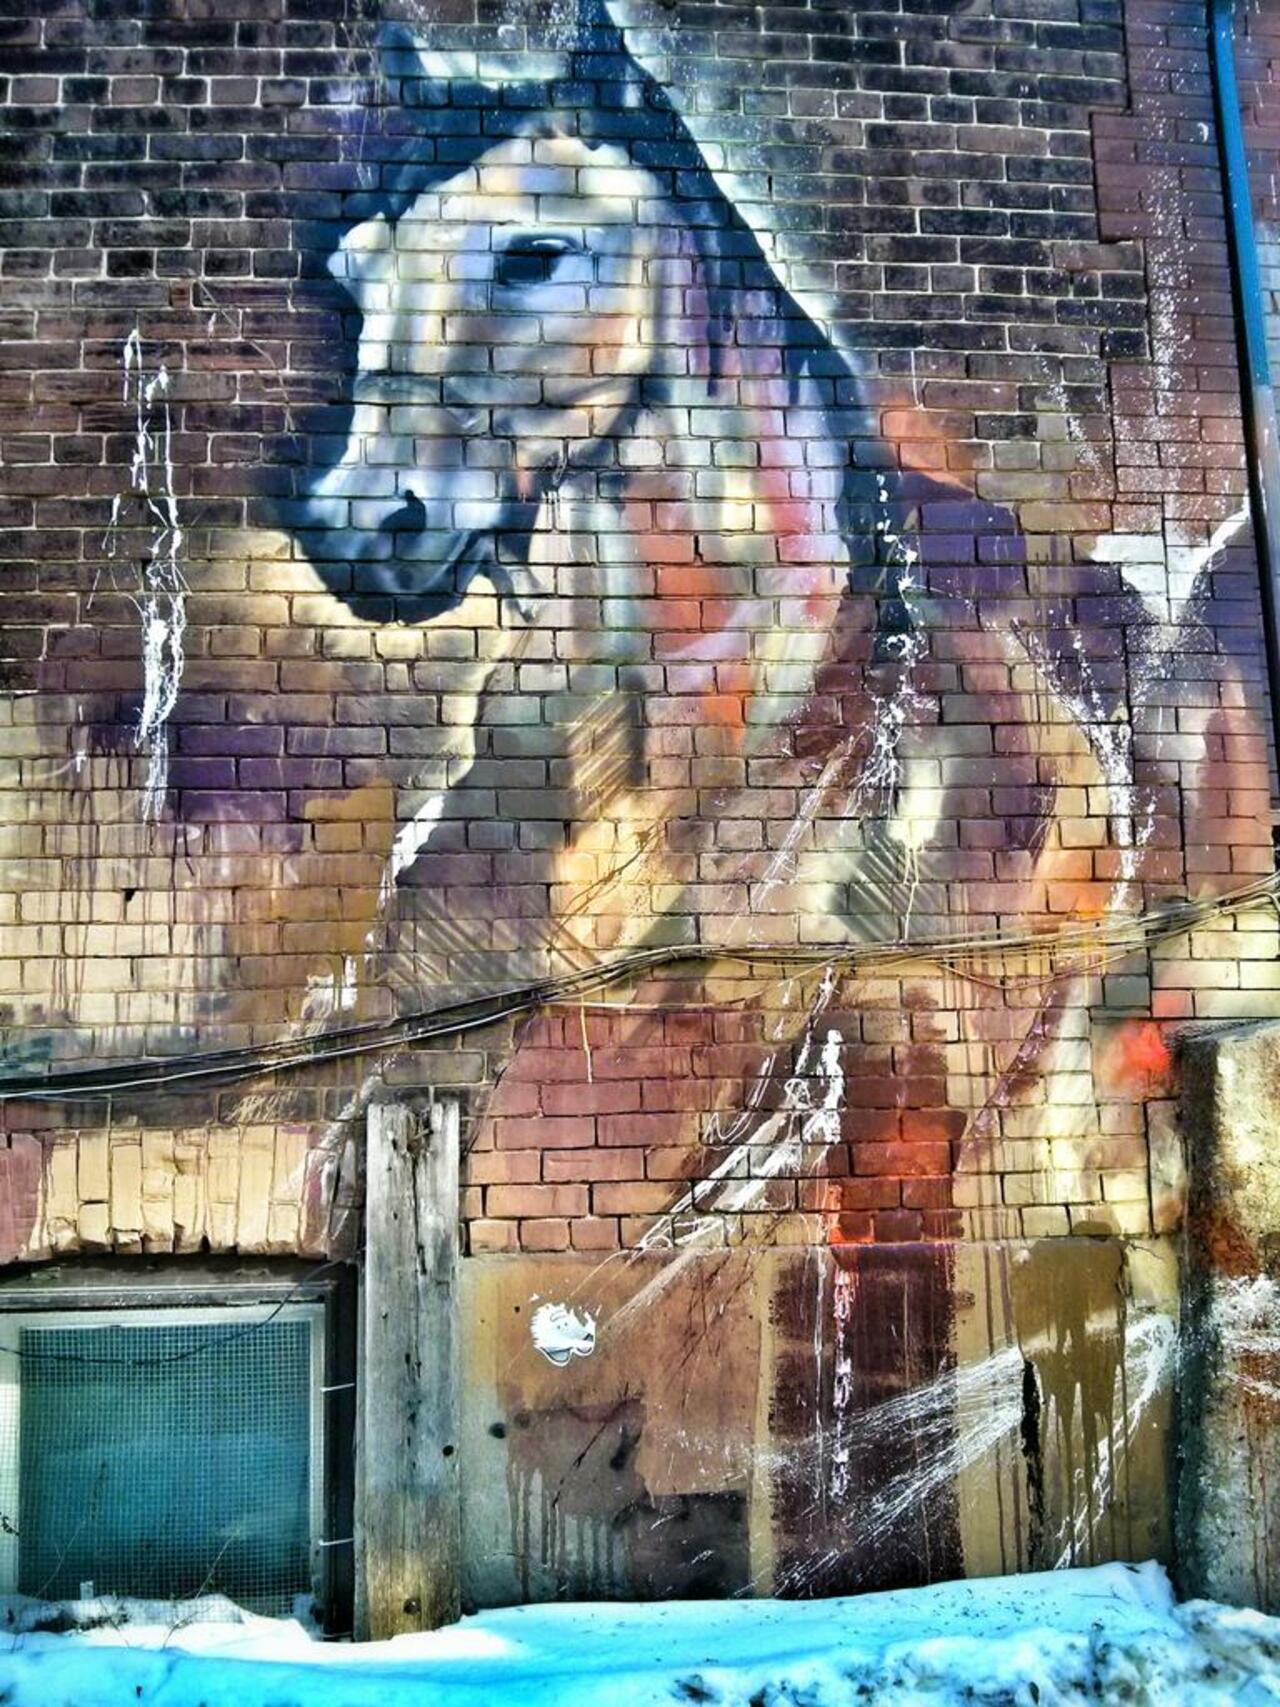 Painterly horse, Parkdale, Toronto.
#graffiti #mural #urbanart #streetart http://t.co/GC6W0KnUfA